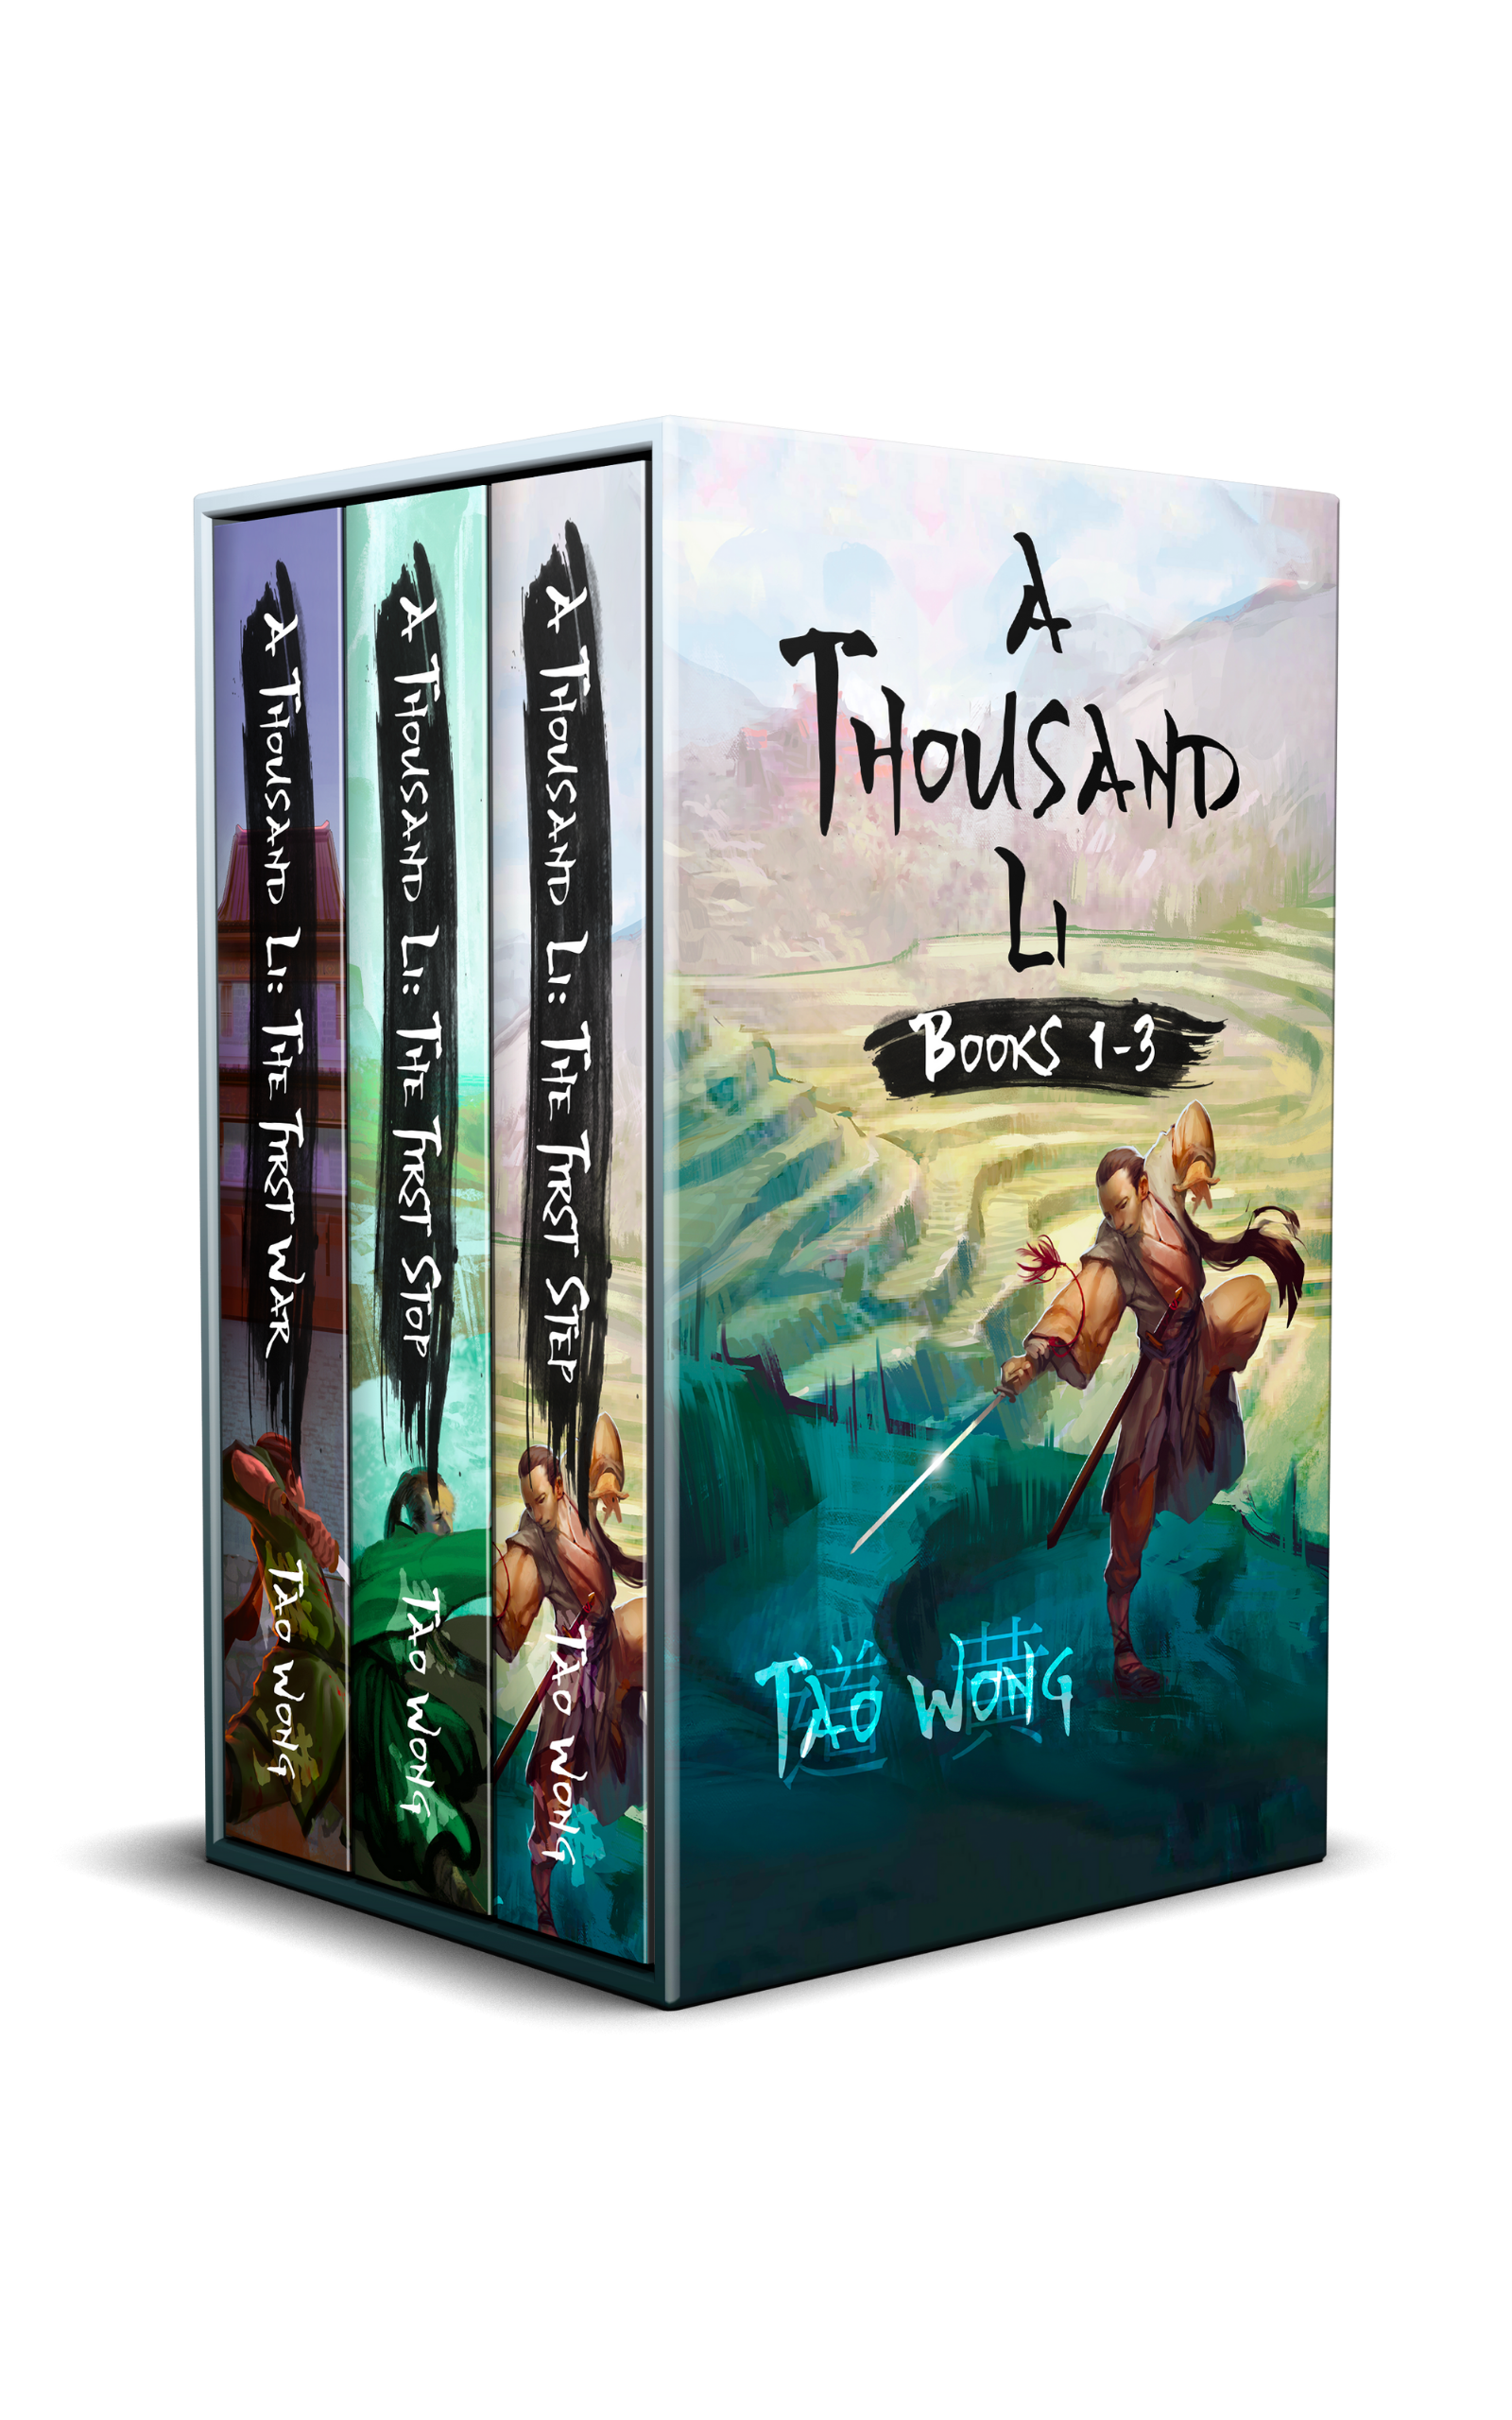 A Thousand Li: Books 1-3